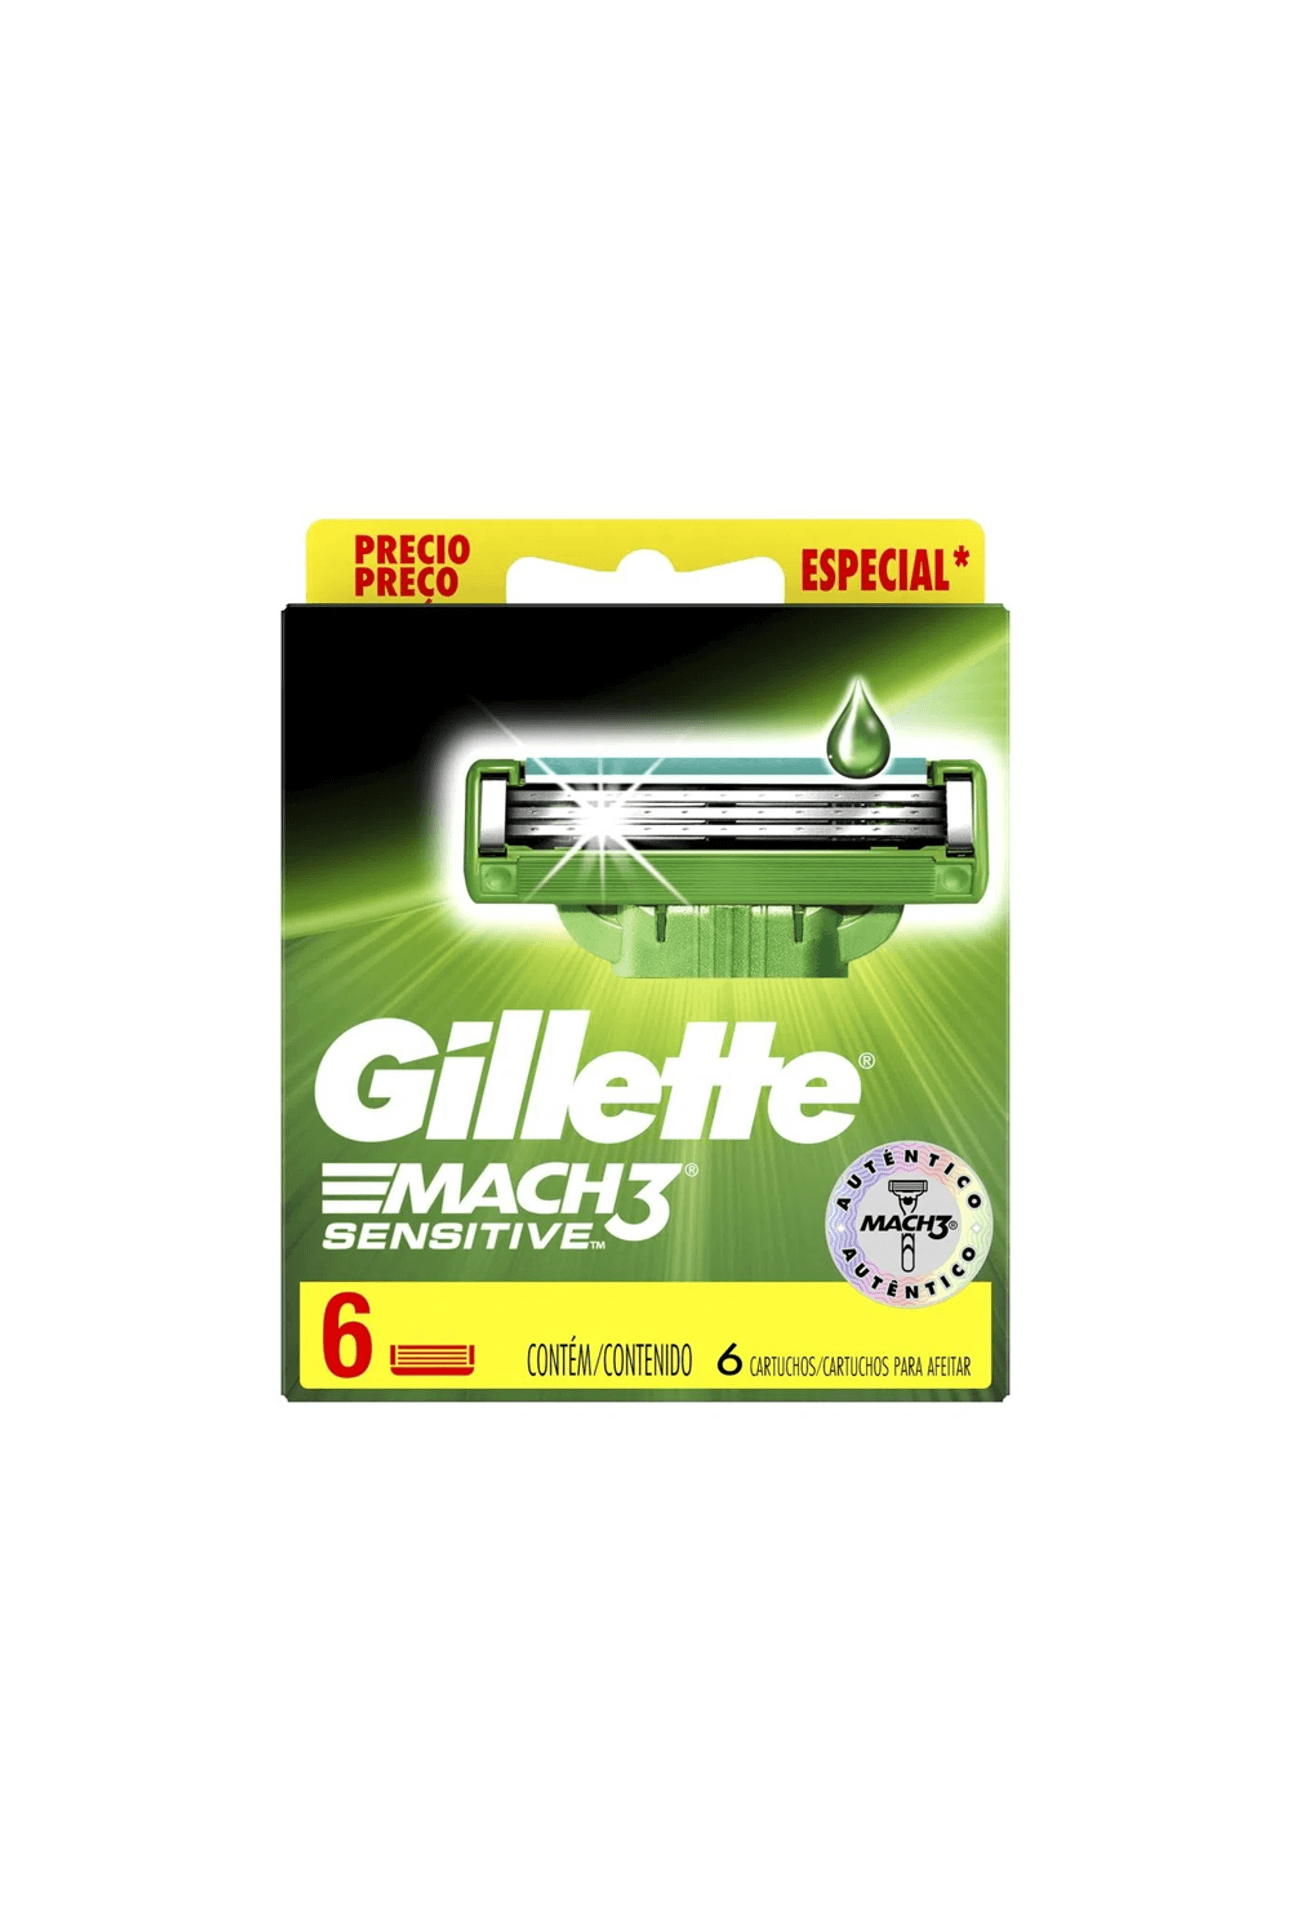 Gillette-Mach3-Sensitive-Cartuchos-x-6-unid-7506339323153_img1